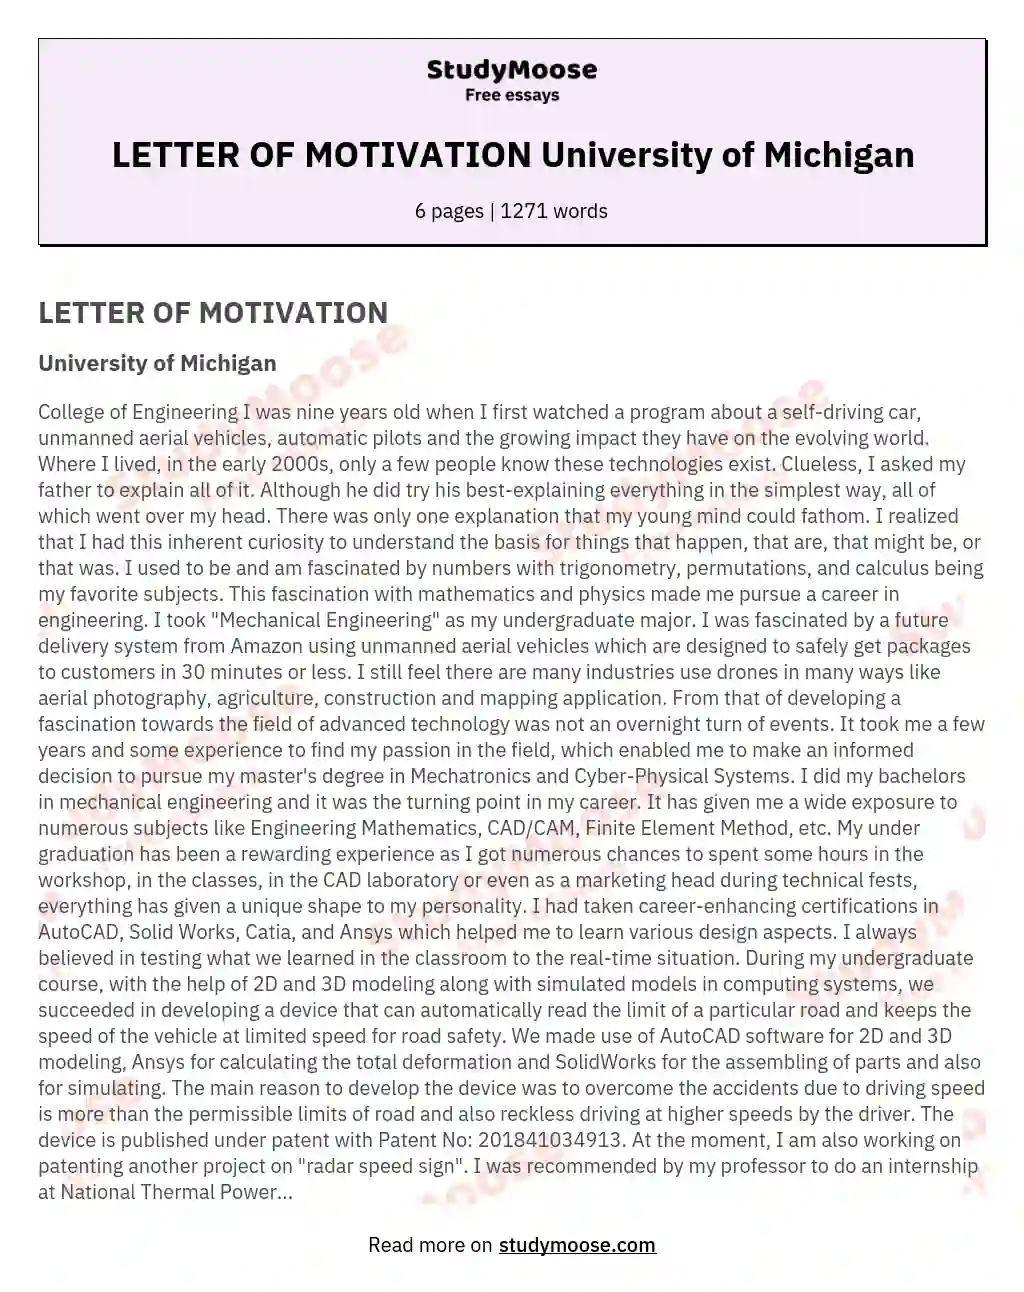 LETTER OF MOTIVATION University of Michigan essay